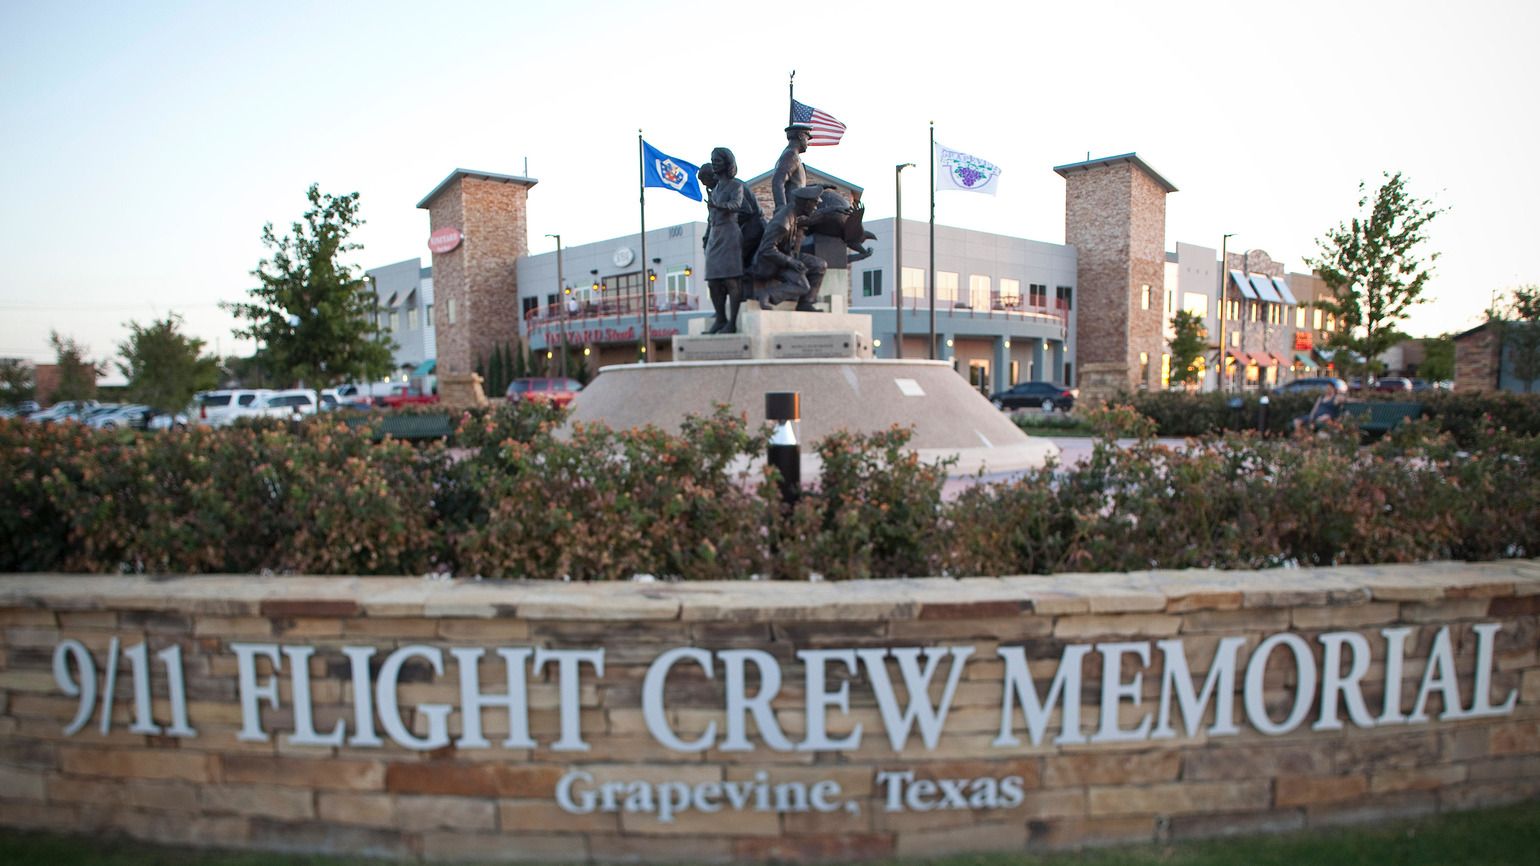 The 911 Flight Crew Memorial in Grapevine, Texas (Alamy)